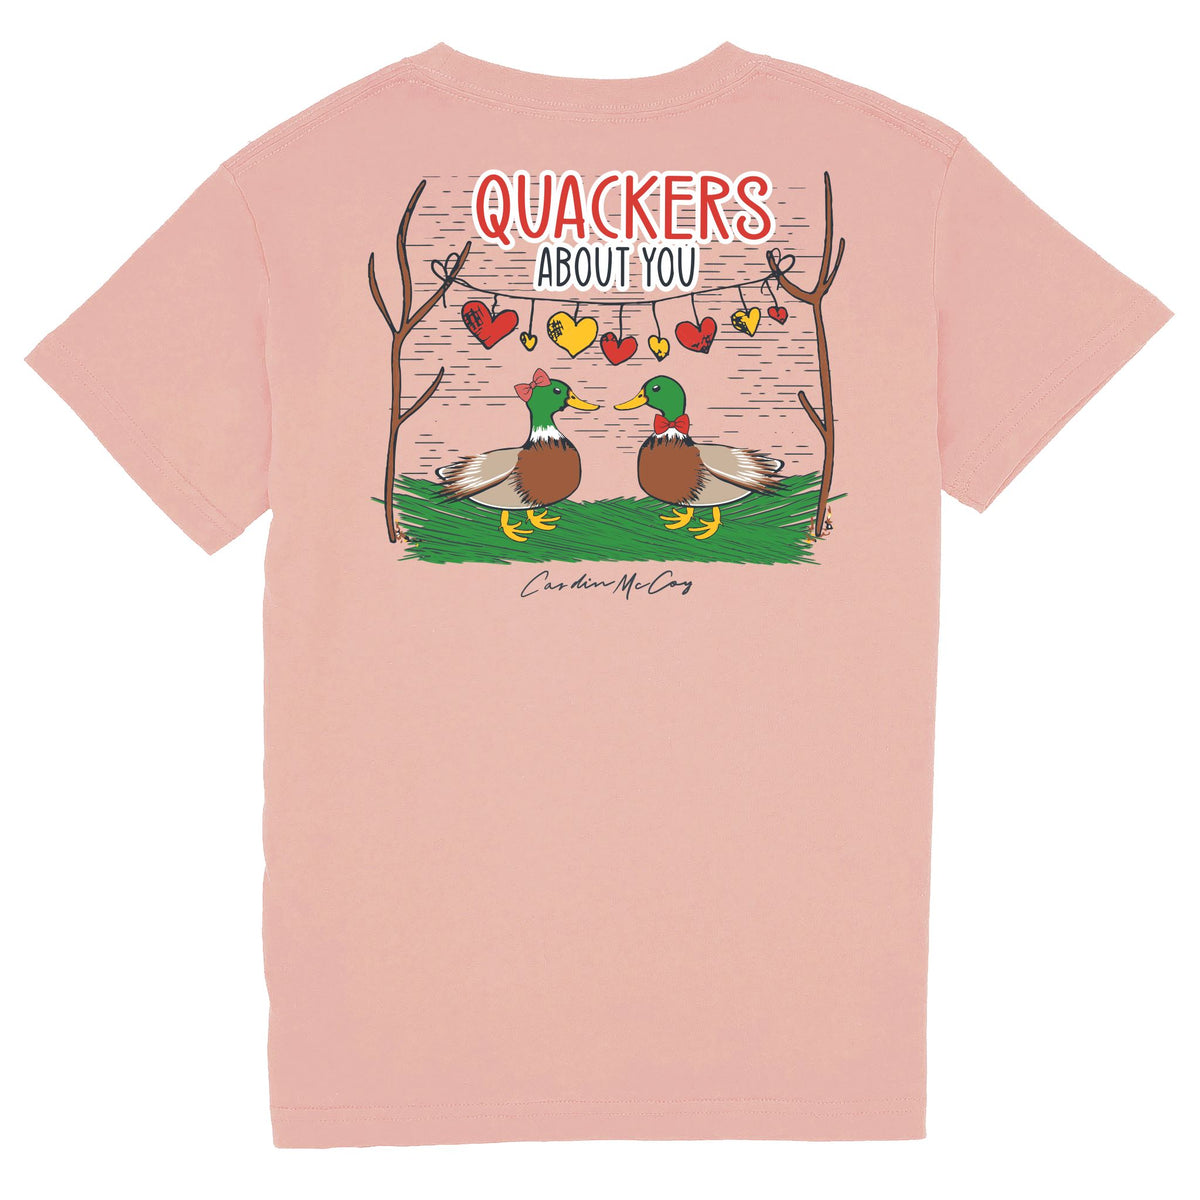 Kids' Quackers About You Short Sleeve Pocket Tee Short Sleeve T-Shirt Cardin McCoy Rose Tan XXS (2/3) 